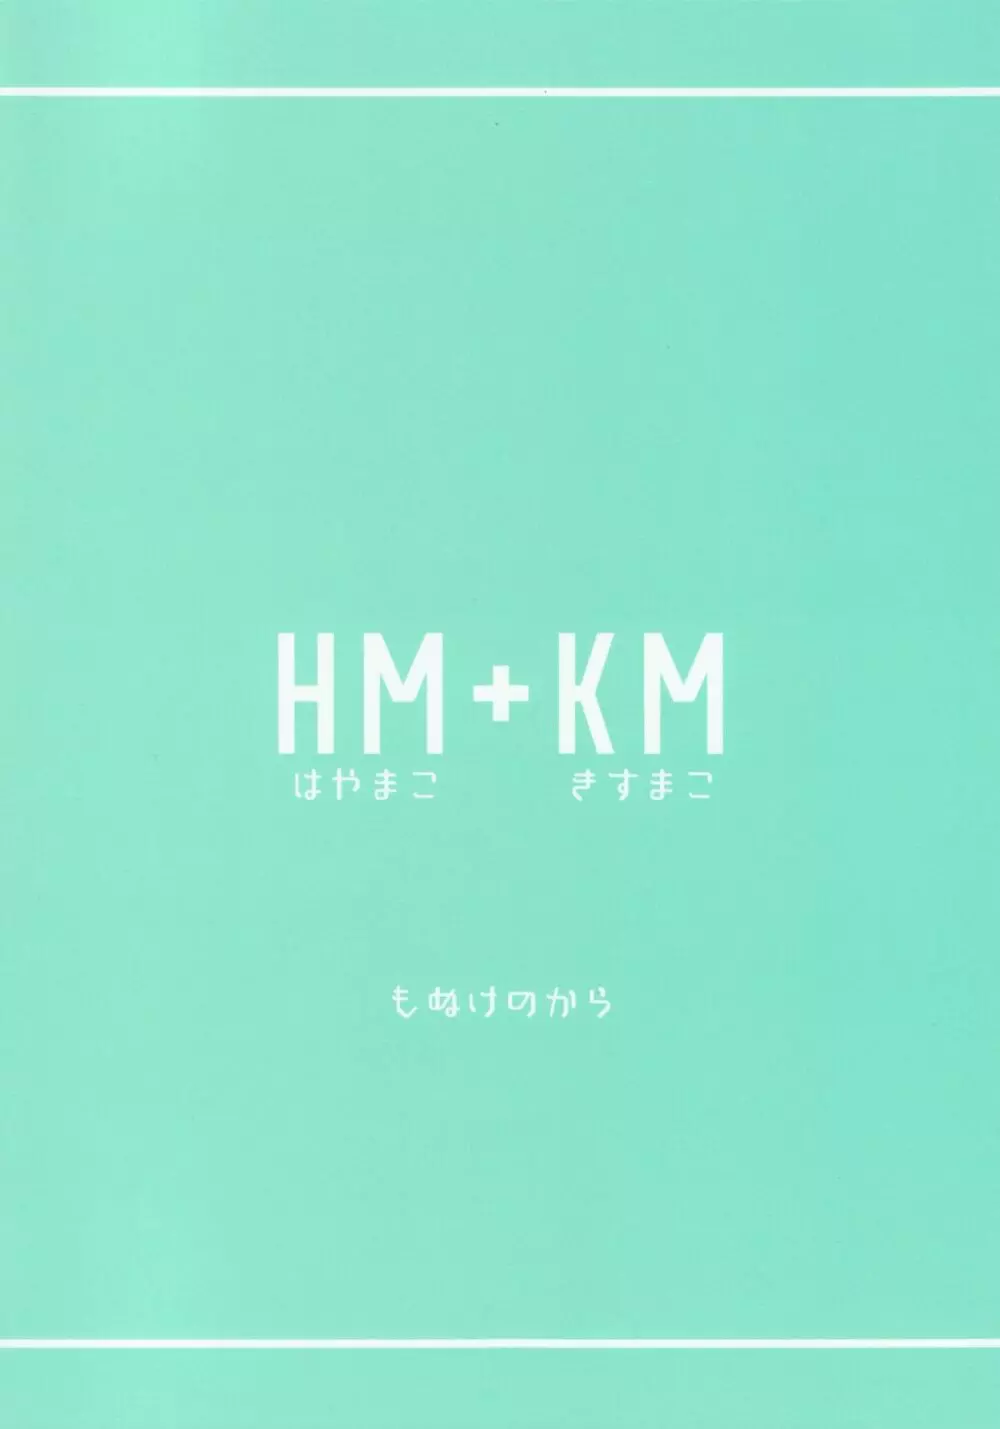 HM + KM 34ページ